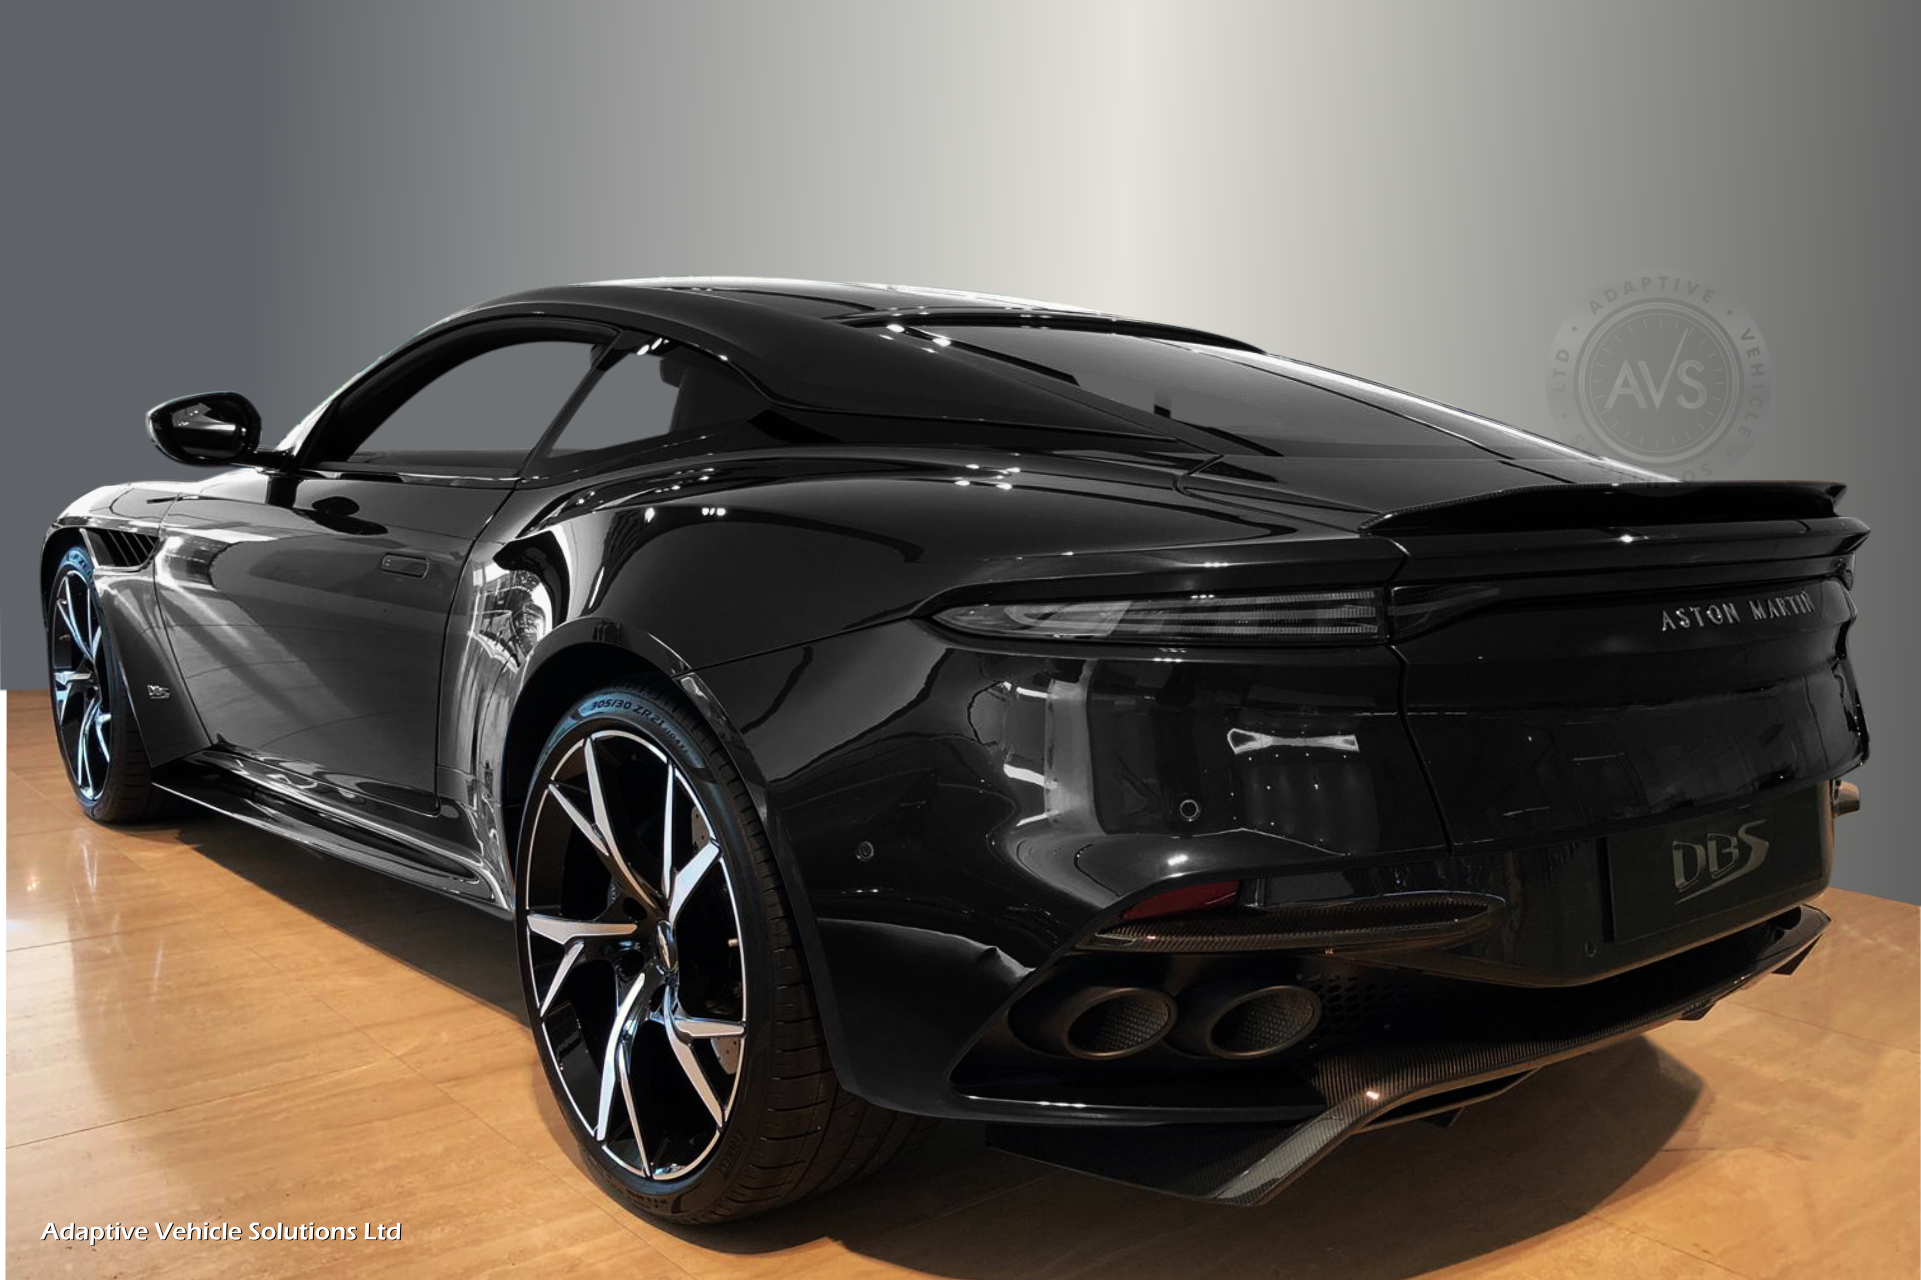 2023 Aston Martin DBS Superleggera Black 05 | Adaptive Vehicle Solutions Ltd